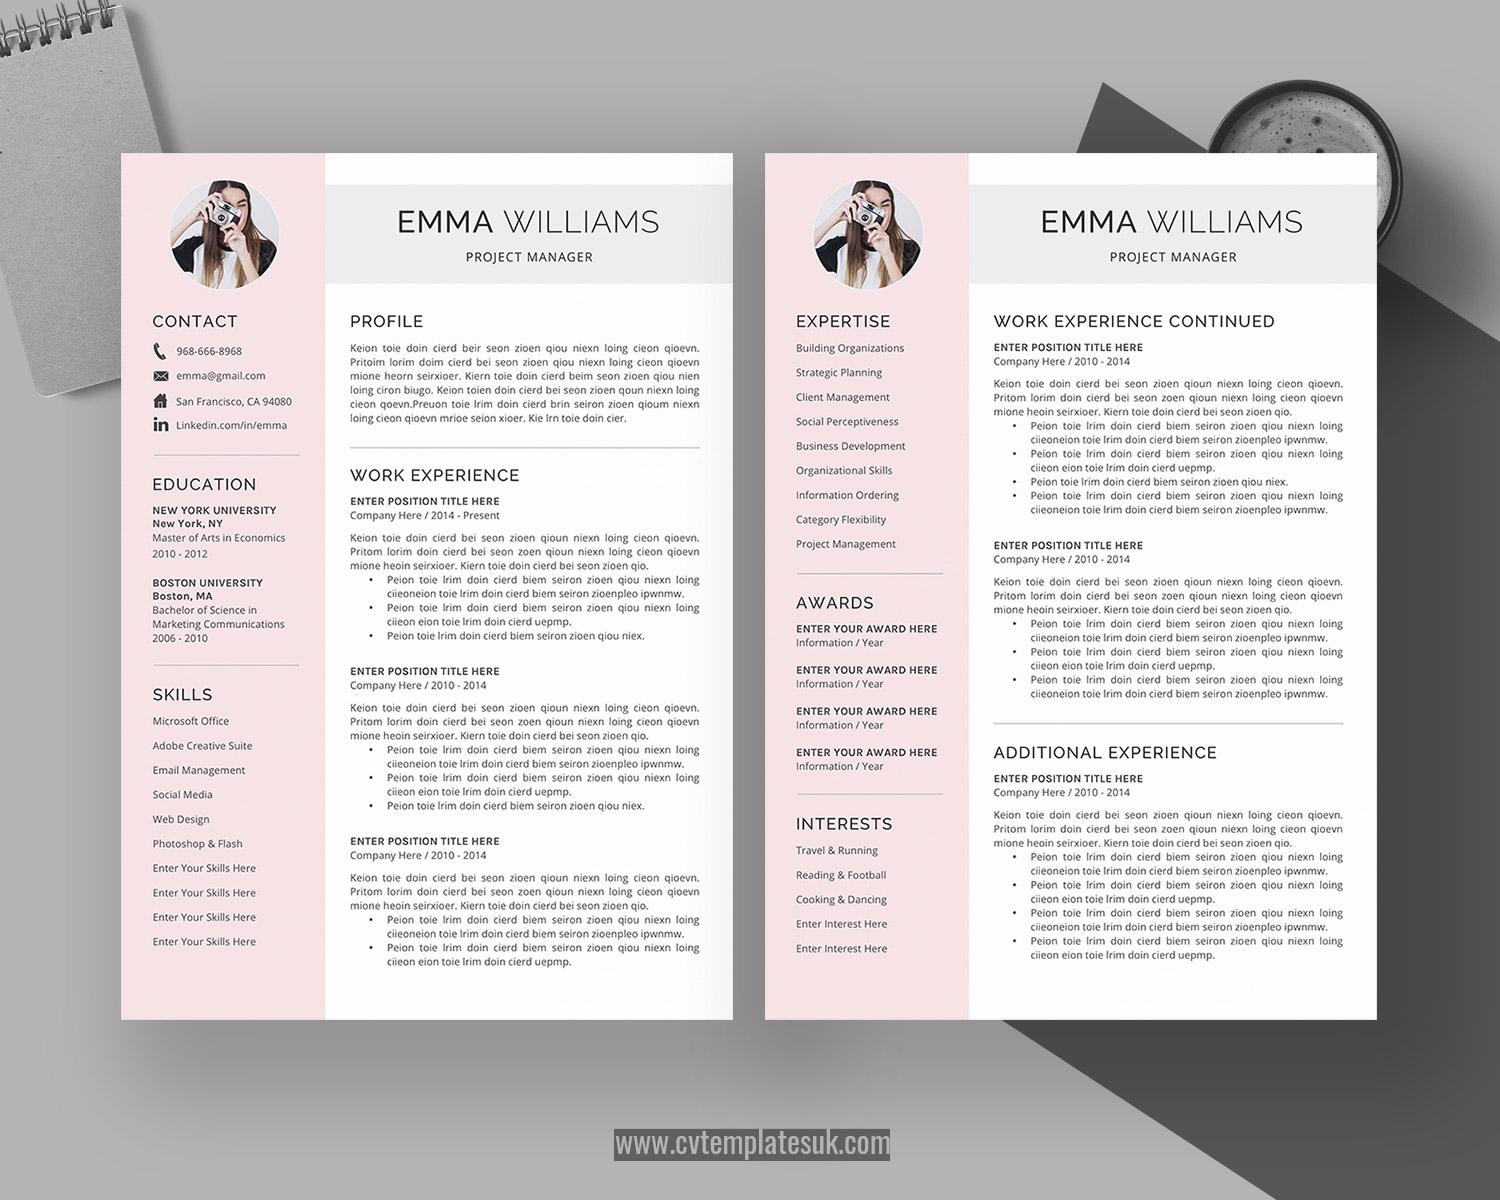 Creative Cv Template Curriculum Vitae Modern Resume Format Professional Resume Template Design Simple Resume 1 3 Page Ms Word Resume Job Resume Instant Download Cvtemplatesuk Com